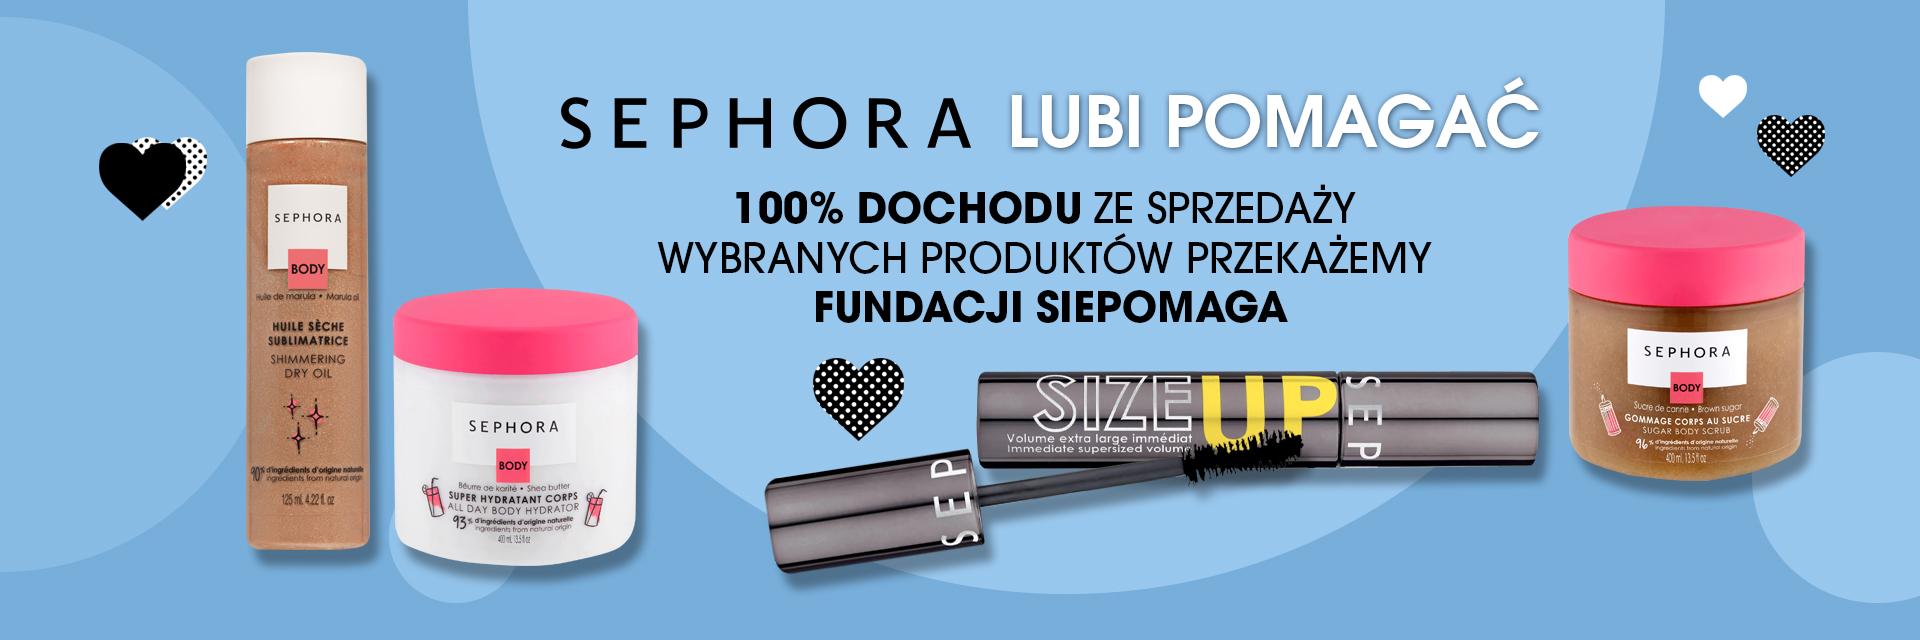 Sephora wspiera ogólnopolską zbiórkę Fundacji Siepomaga